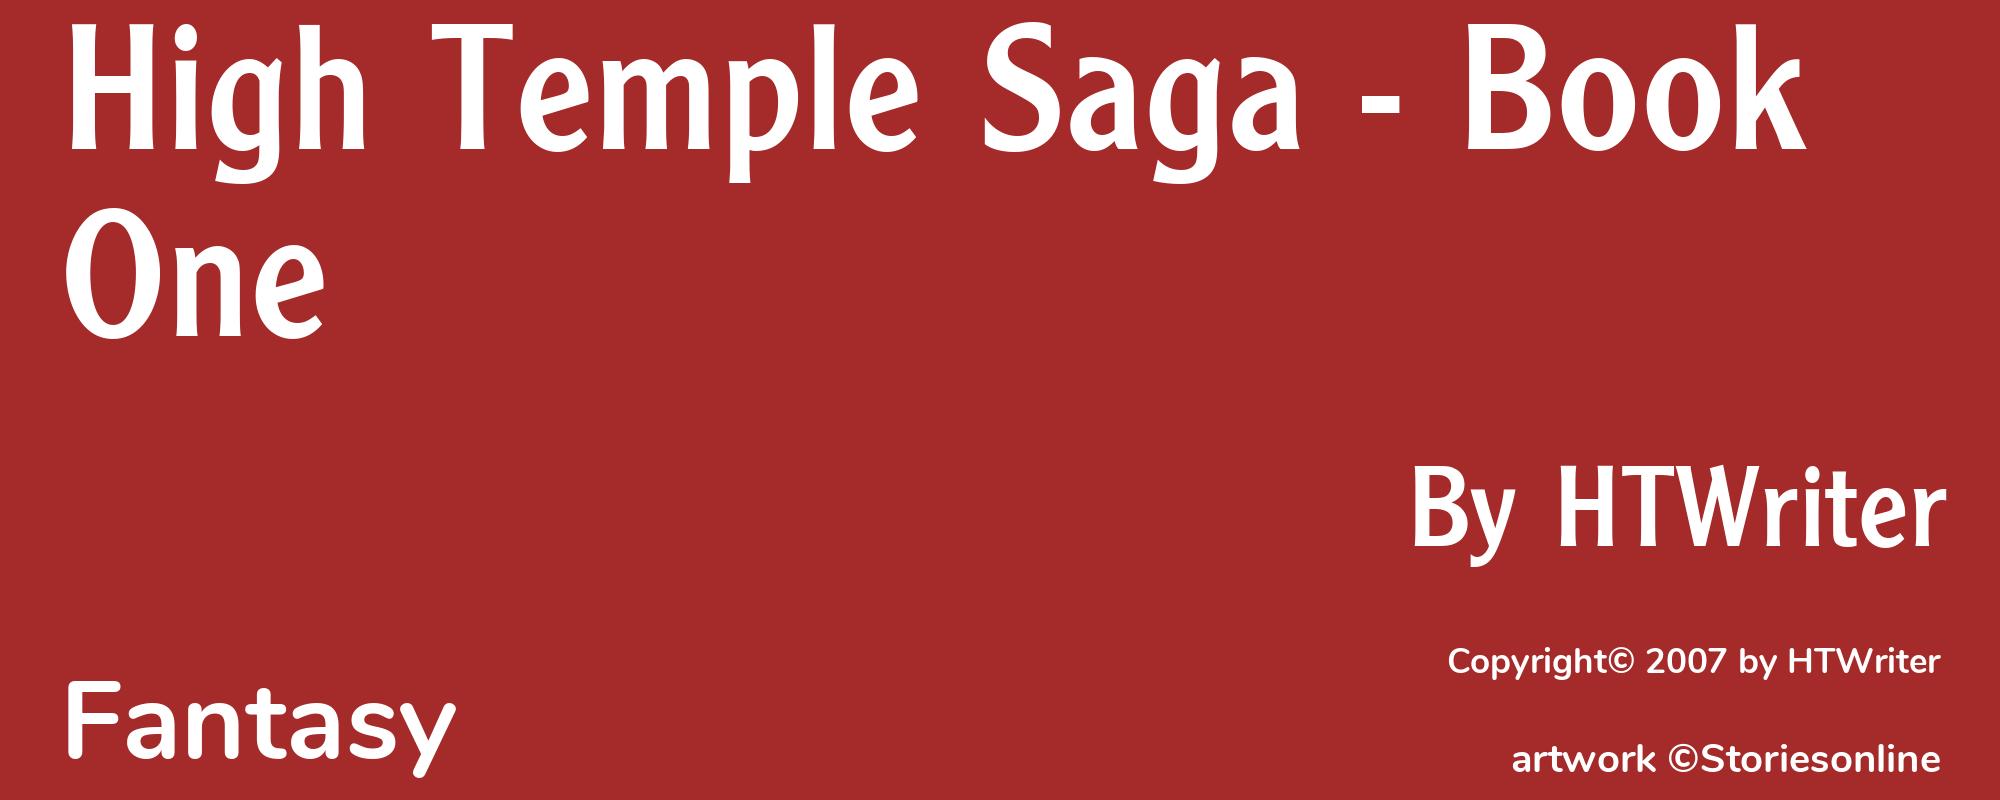 High Temple Saga - Book One - Cover